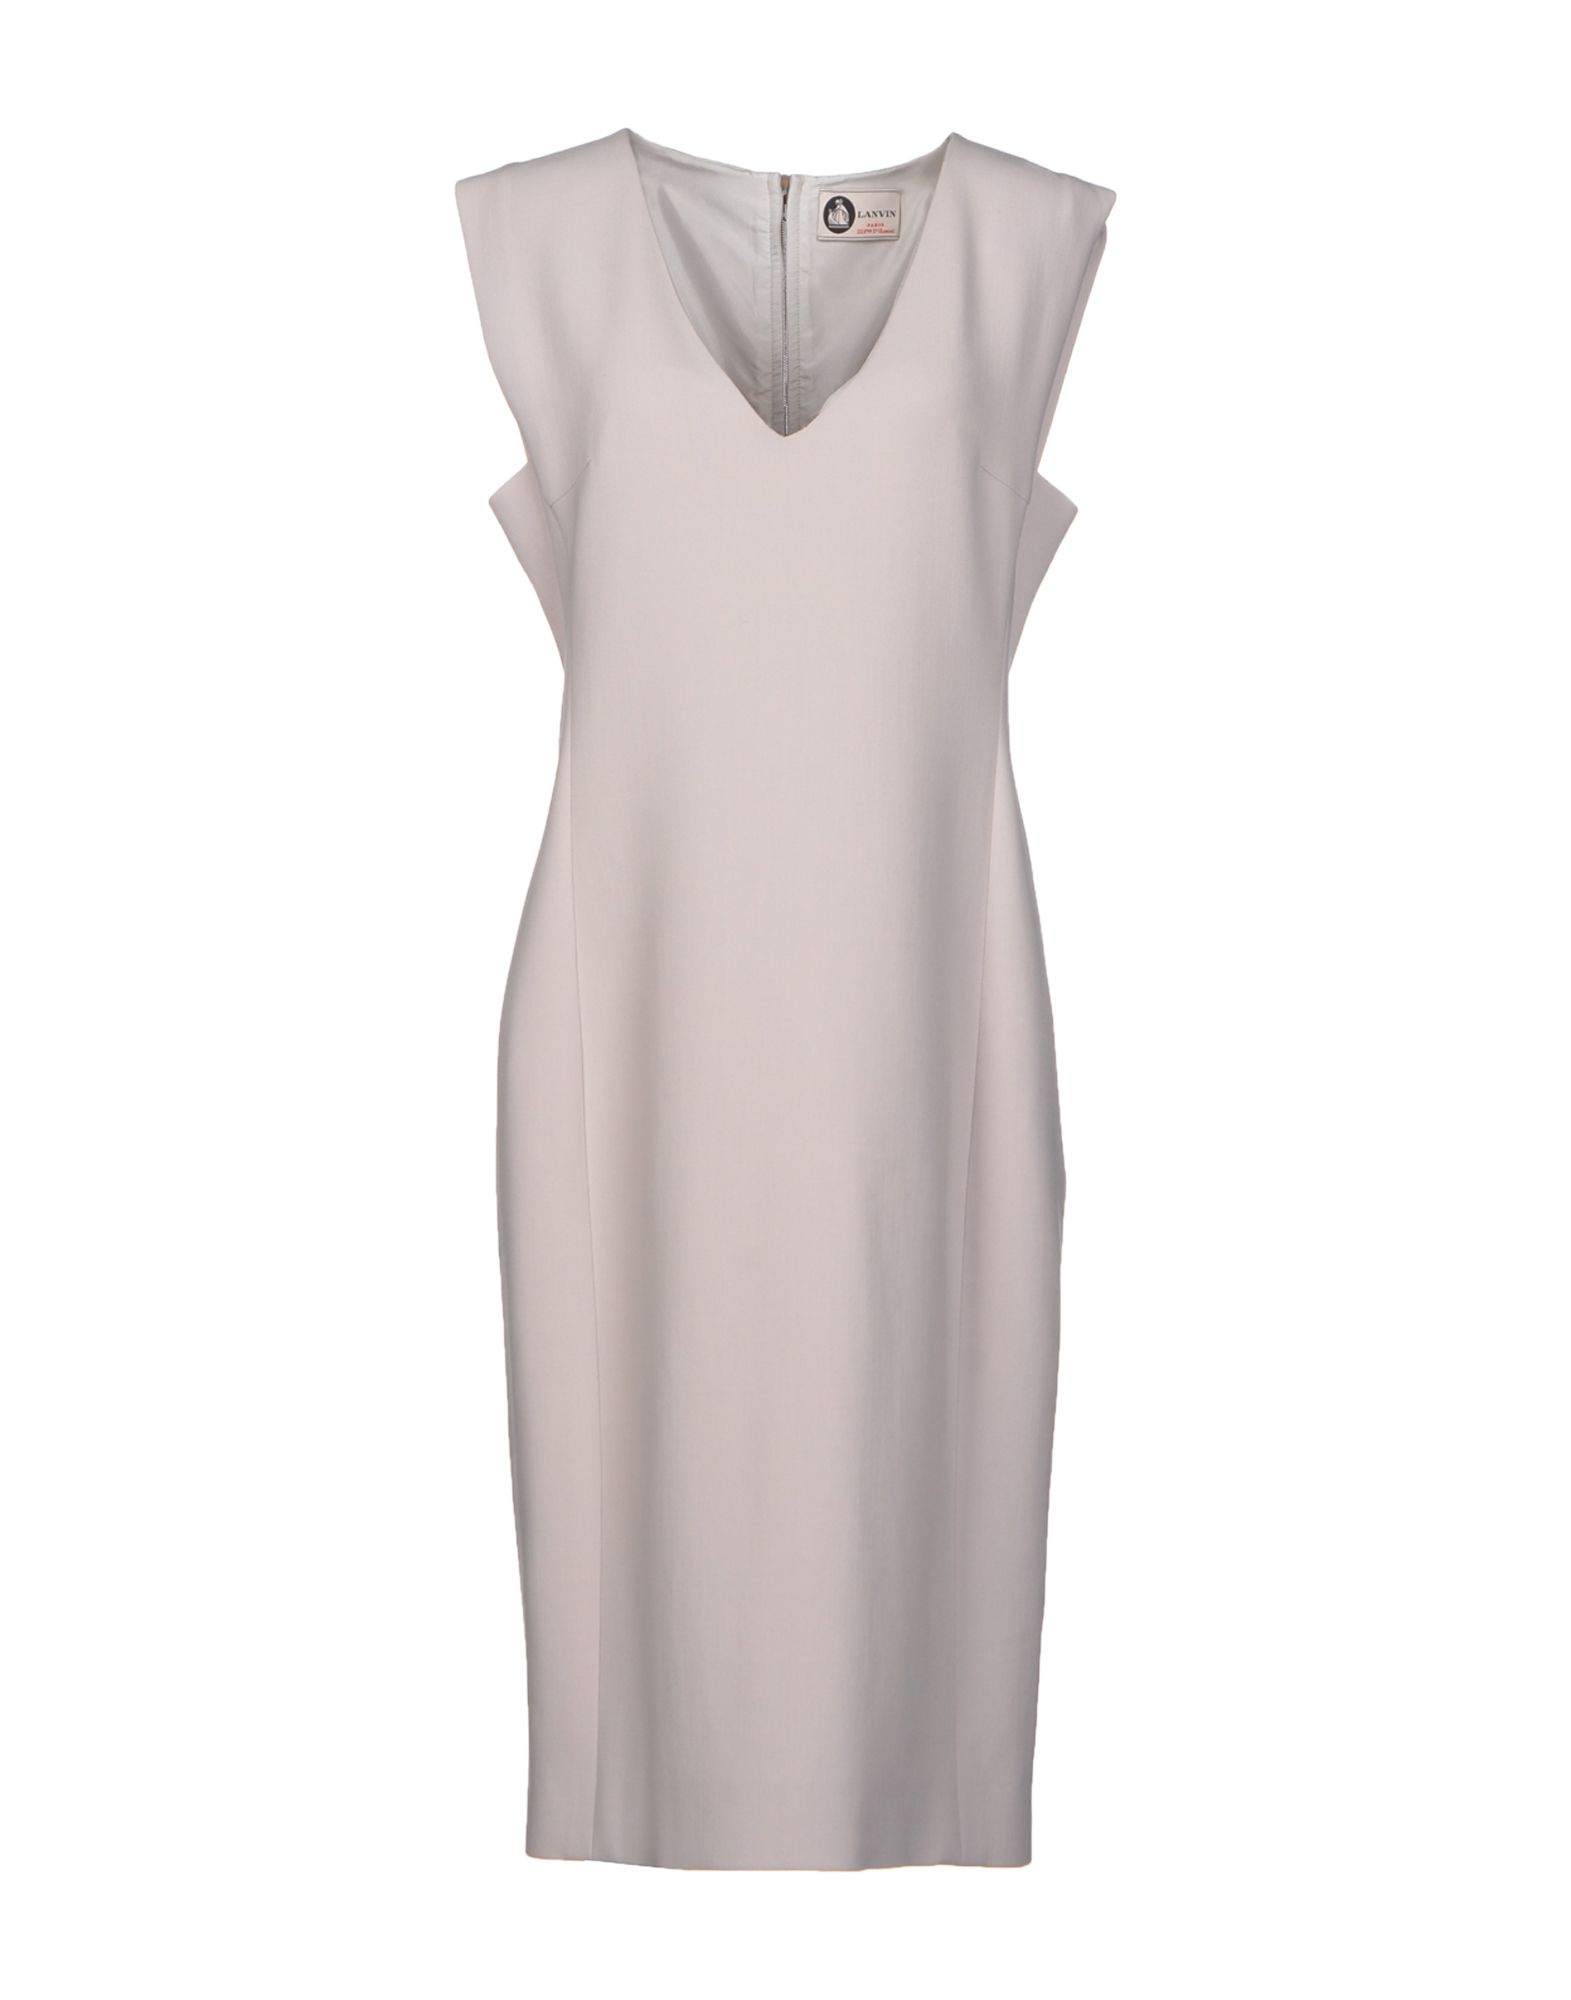 Lanvin Knee-Length Dress in Gray (Light grey)